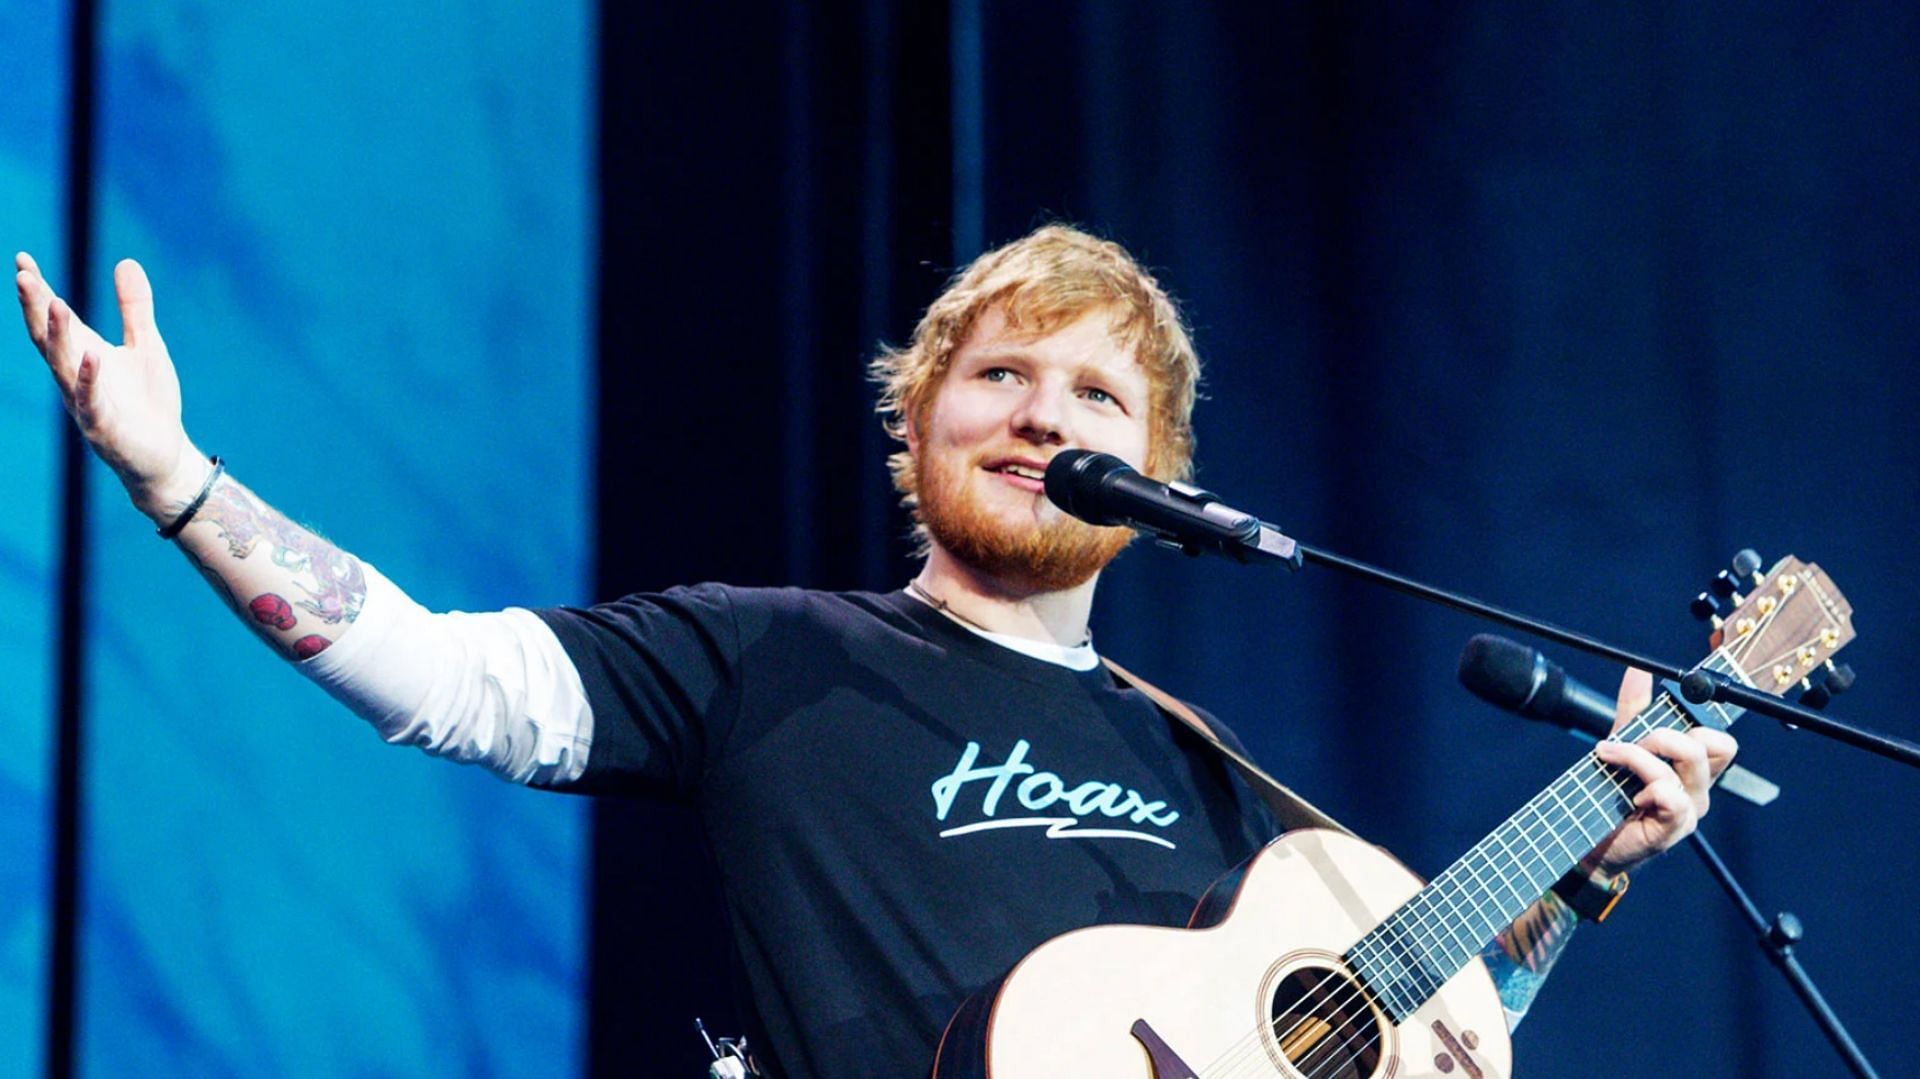 Ed Sheeran has announced the North American leg of his tour. (Image via Ricardo Rubio / Getty)